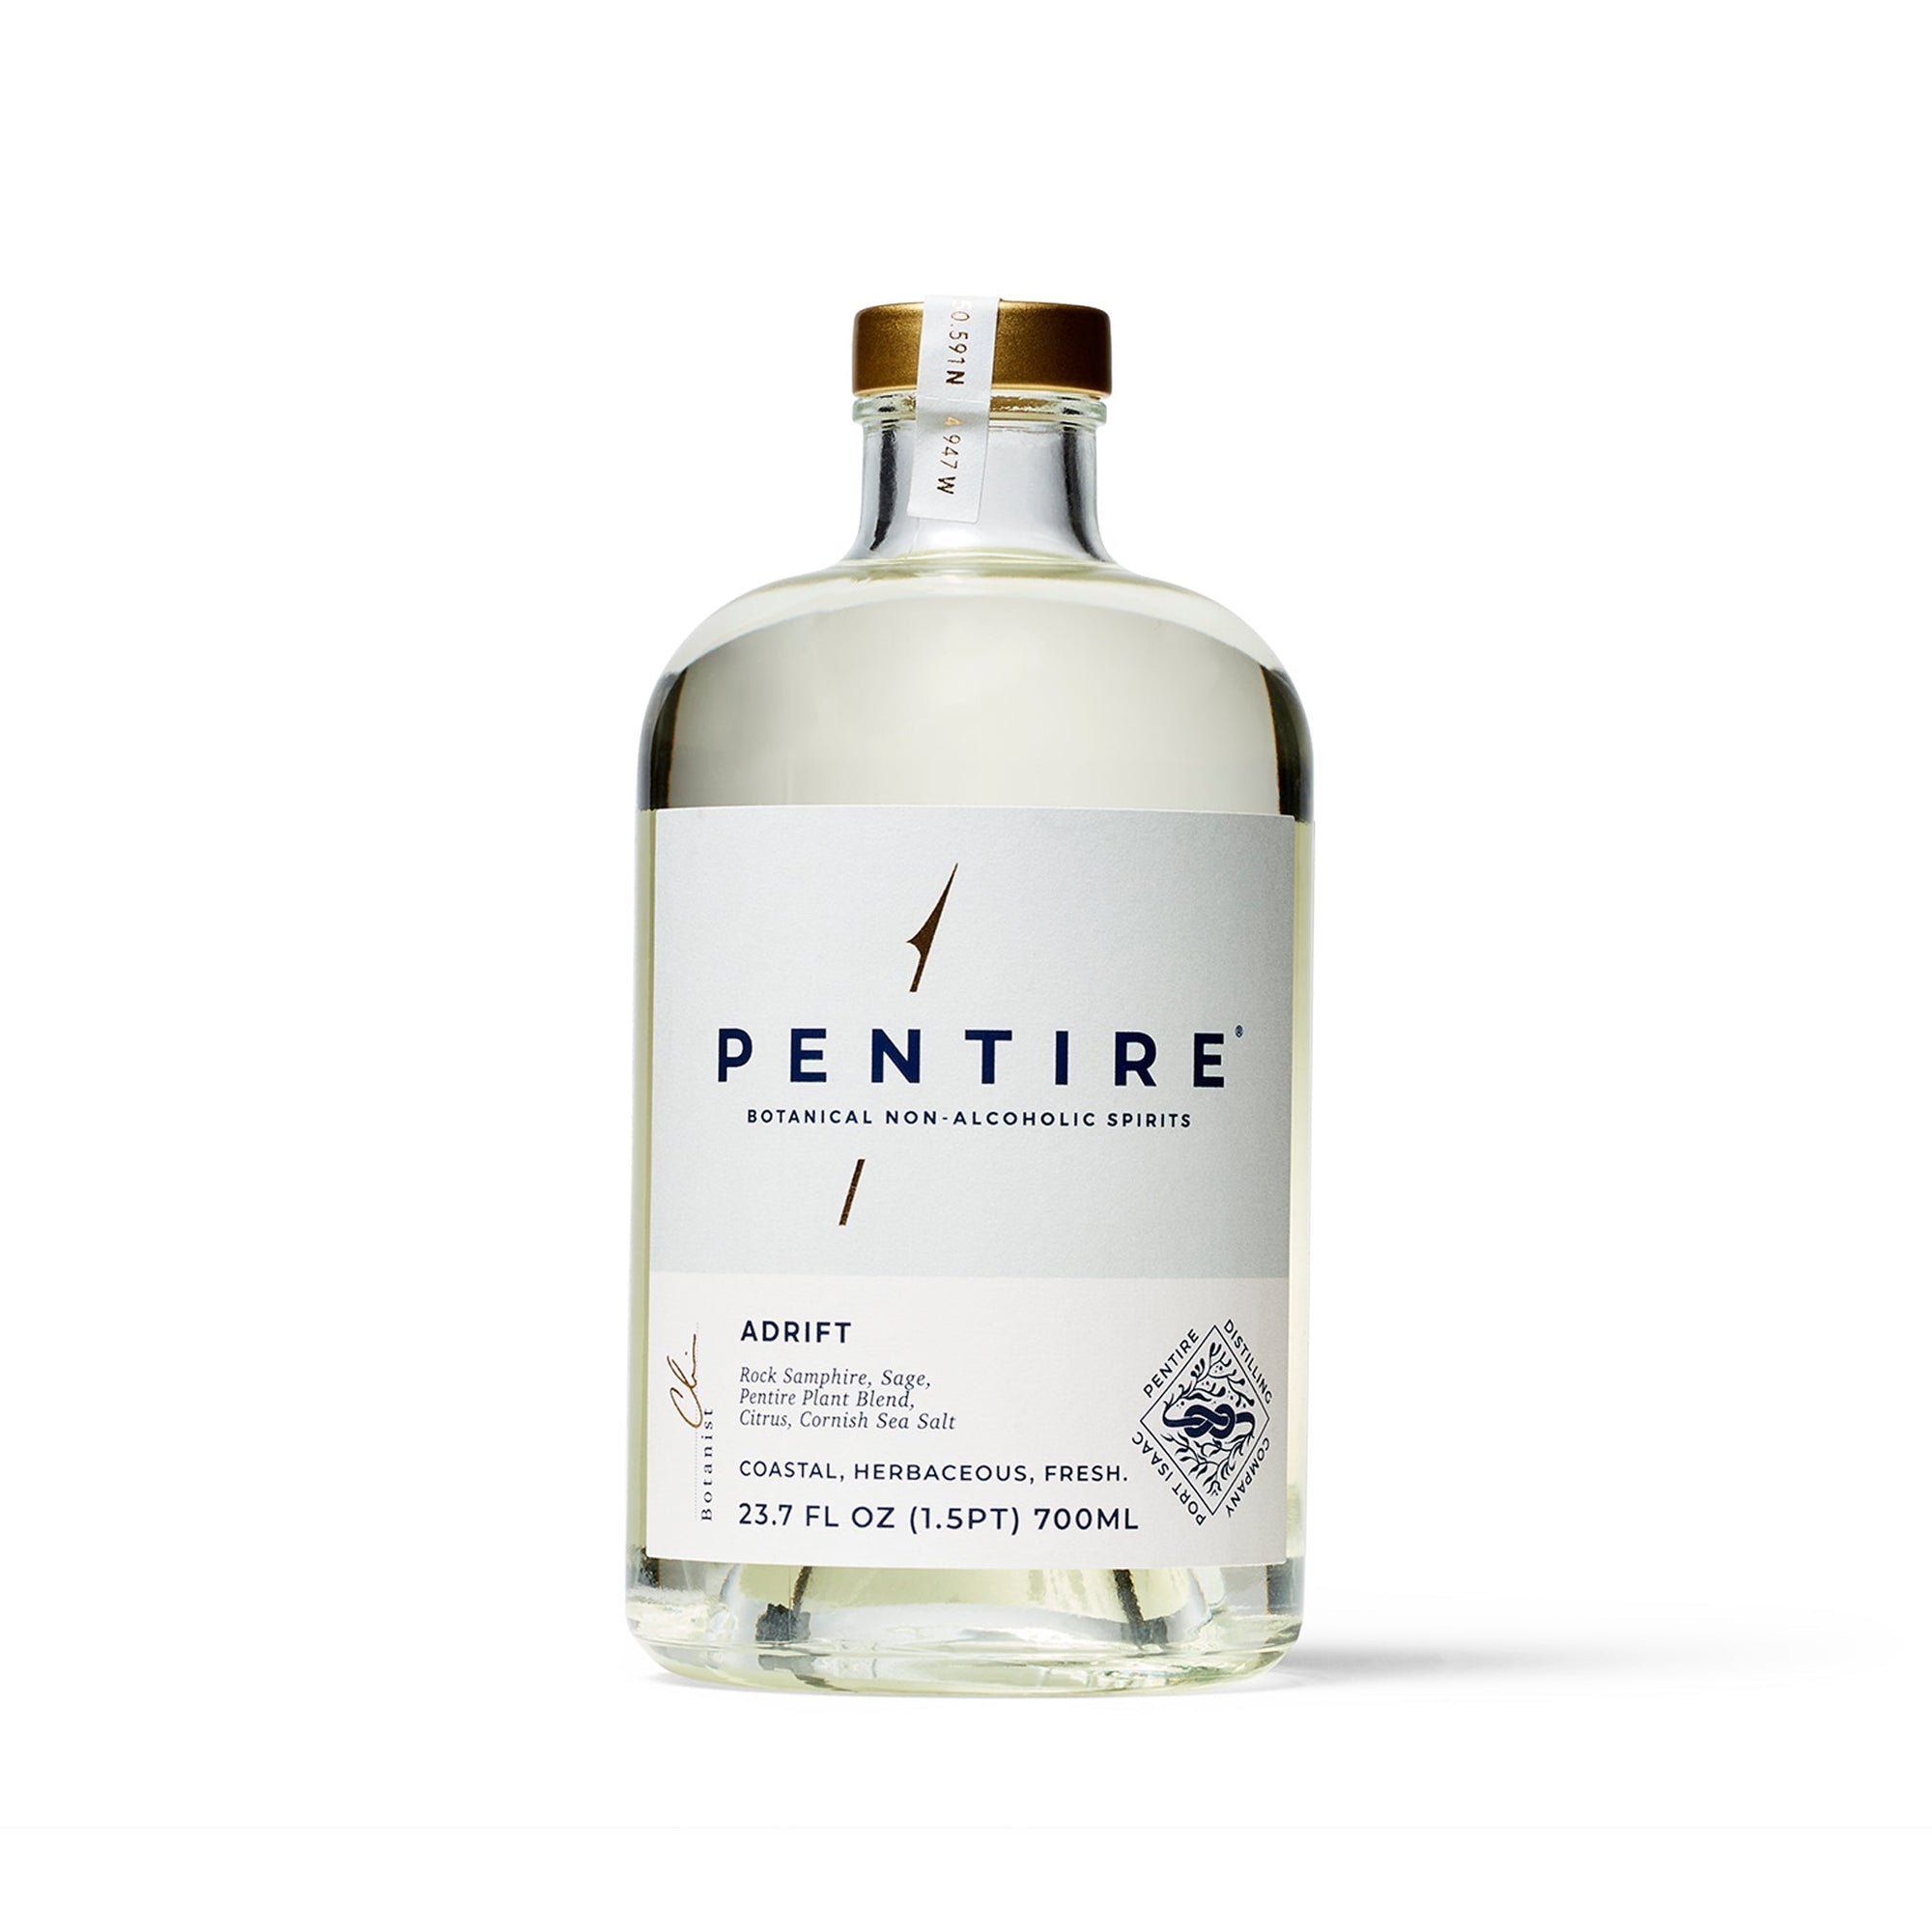 Pentire - Adrift - Non-Alcoholic Distilled Spirit 200ml - Boisson